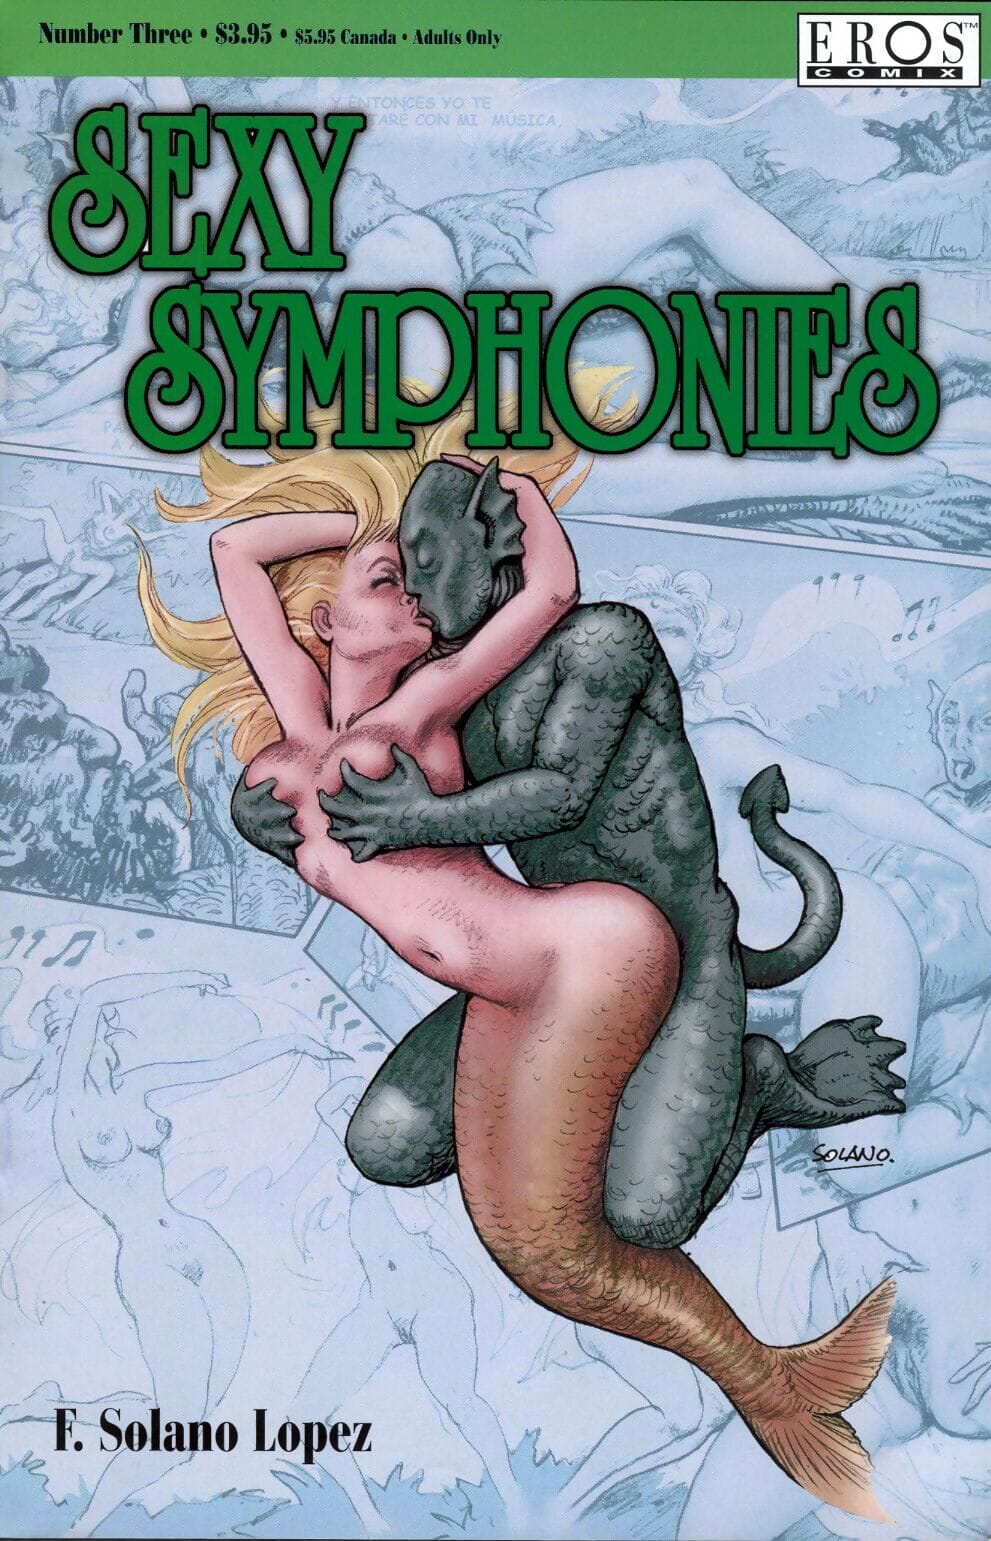 सेक्सी symphonies #3